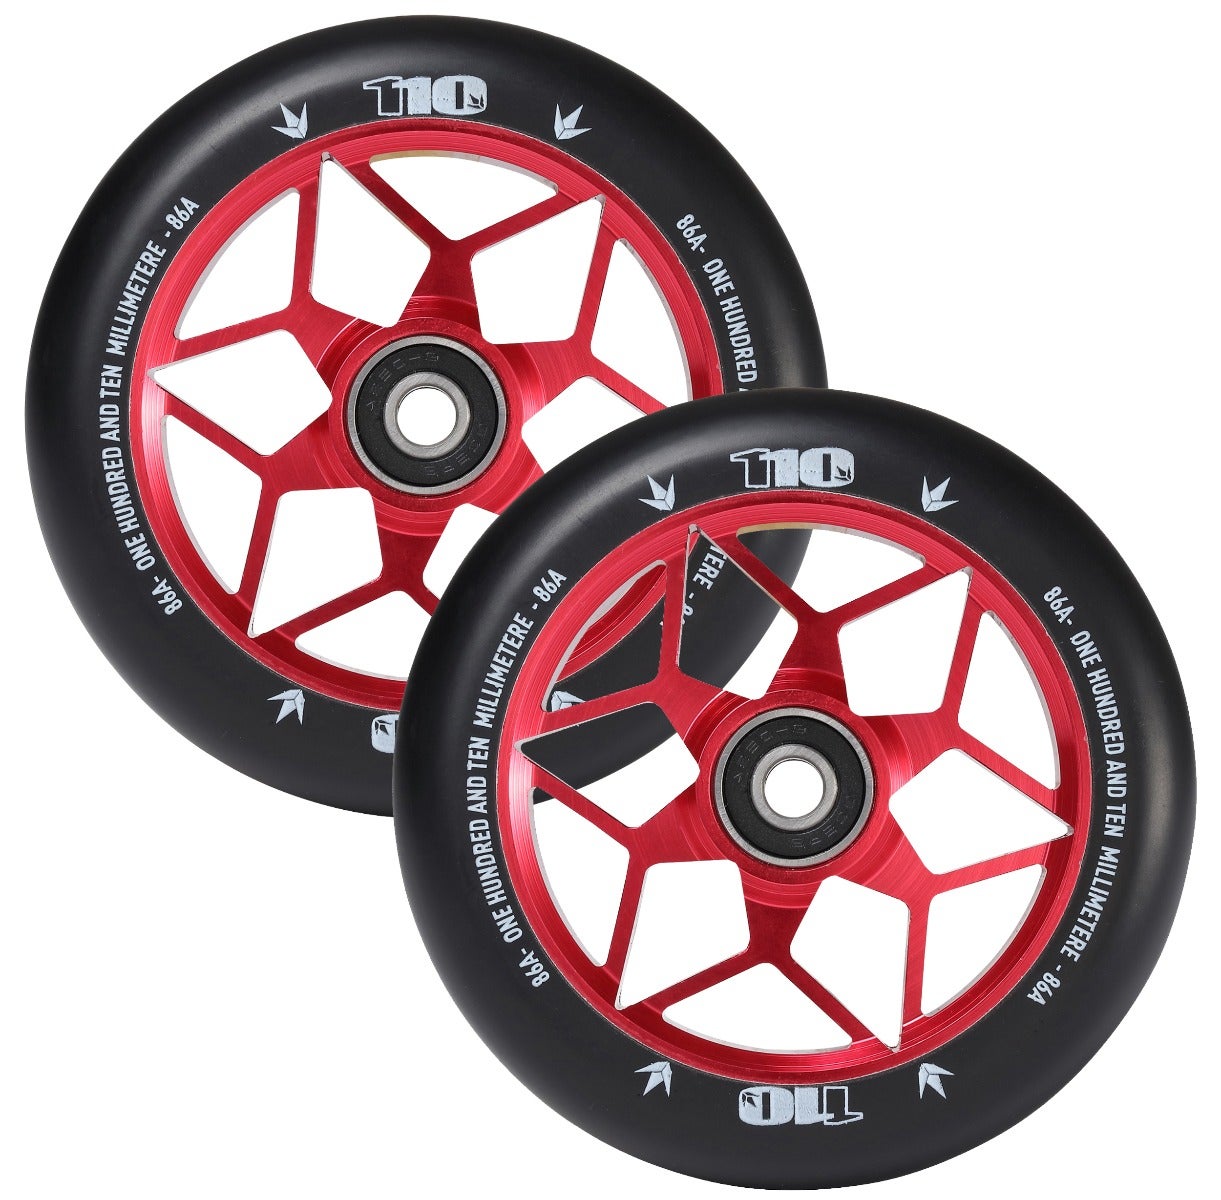 Blunt Envy Diamond Scooter Wheel Pair - 110mm x 24mm - Black Red
